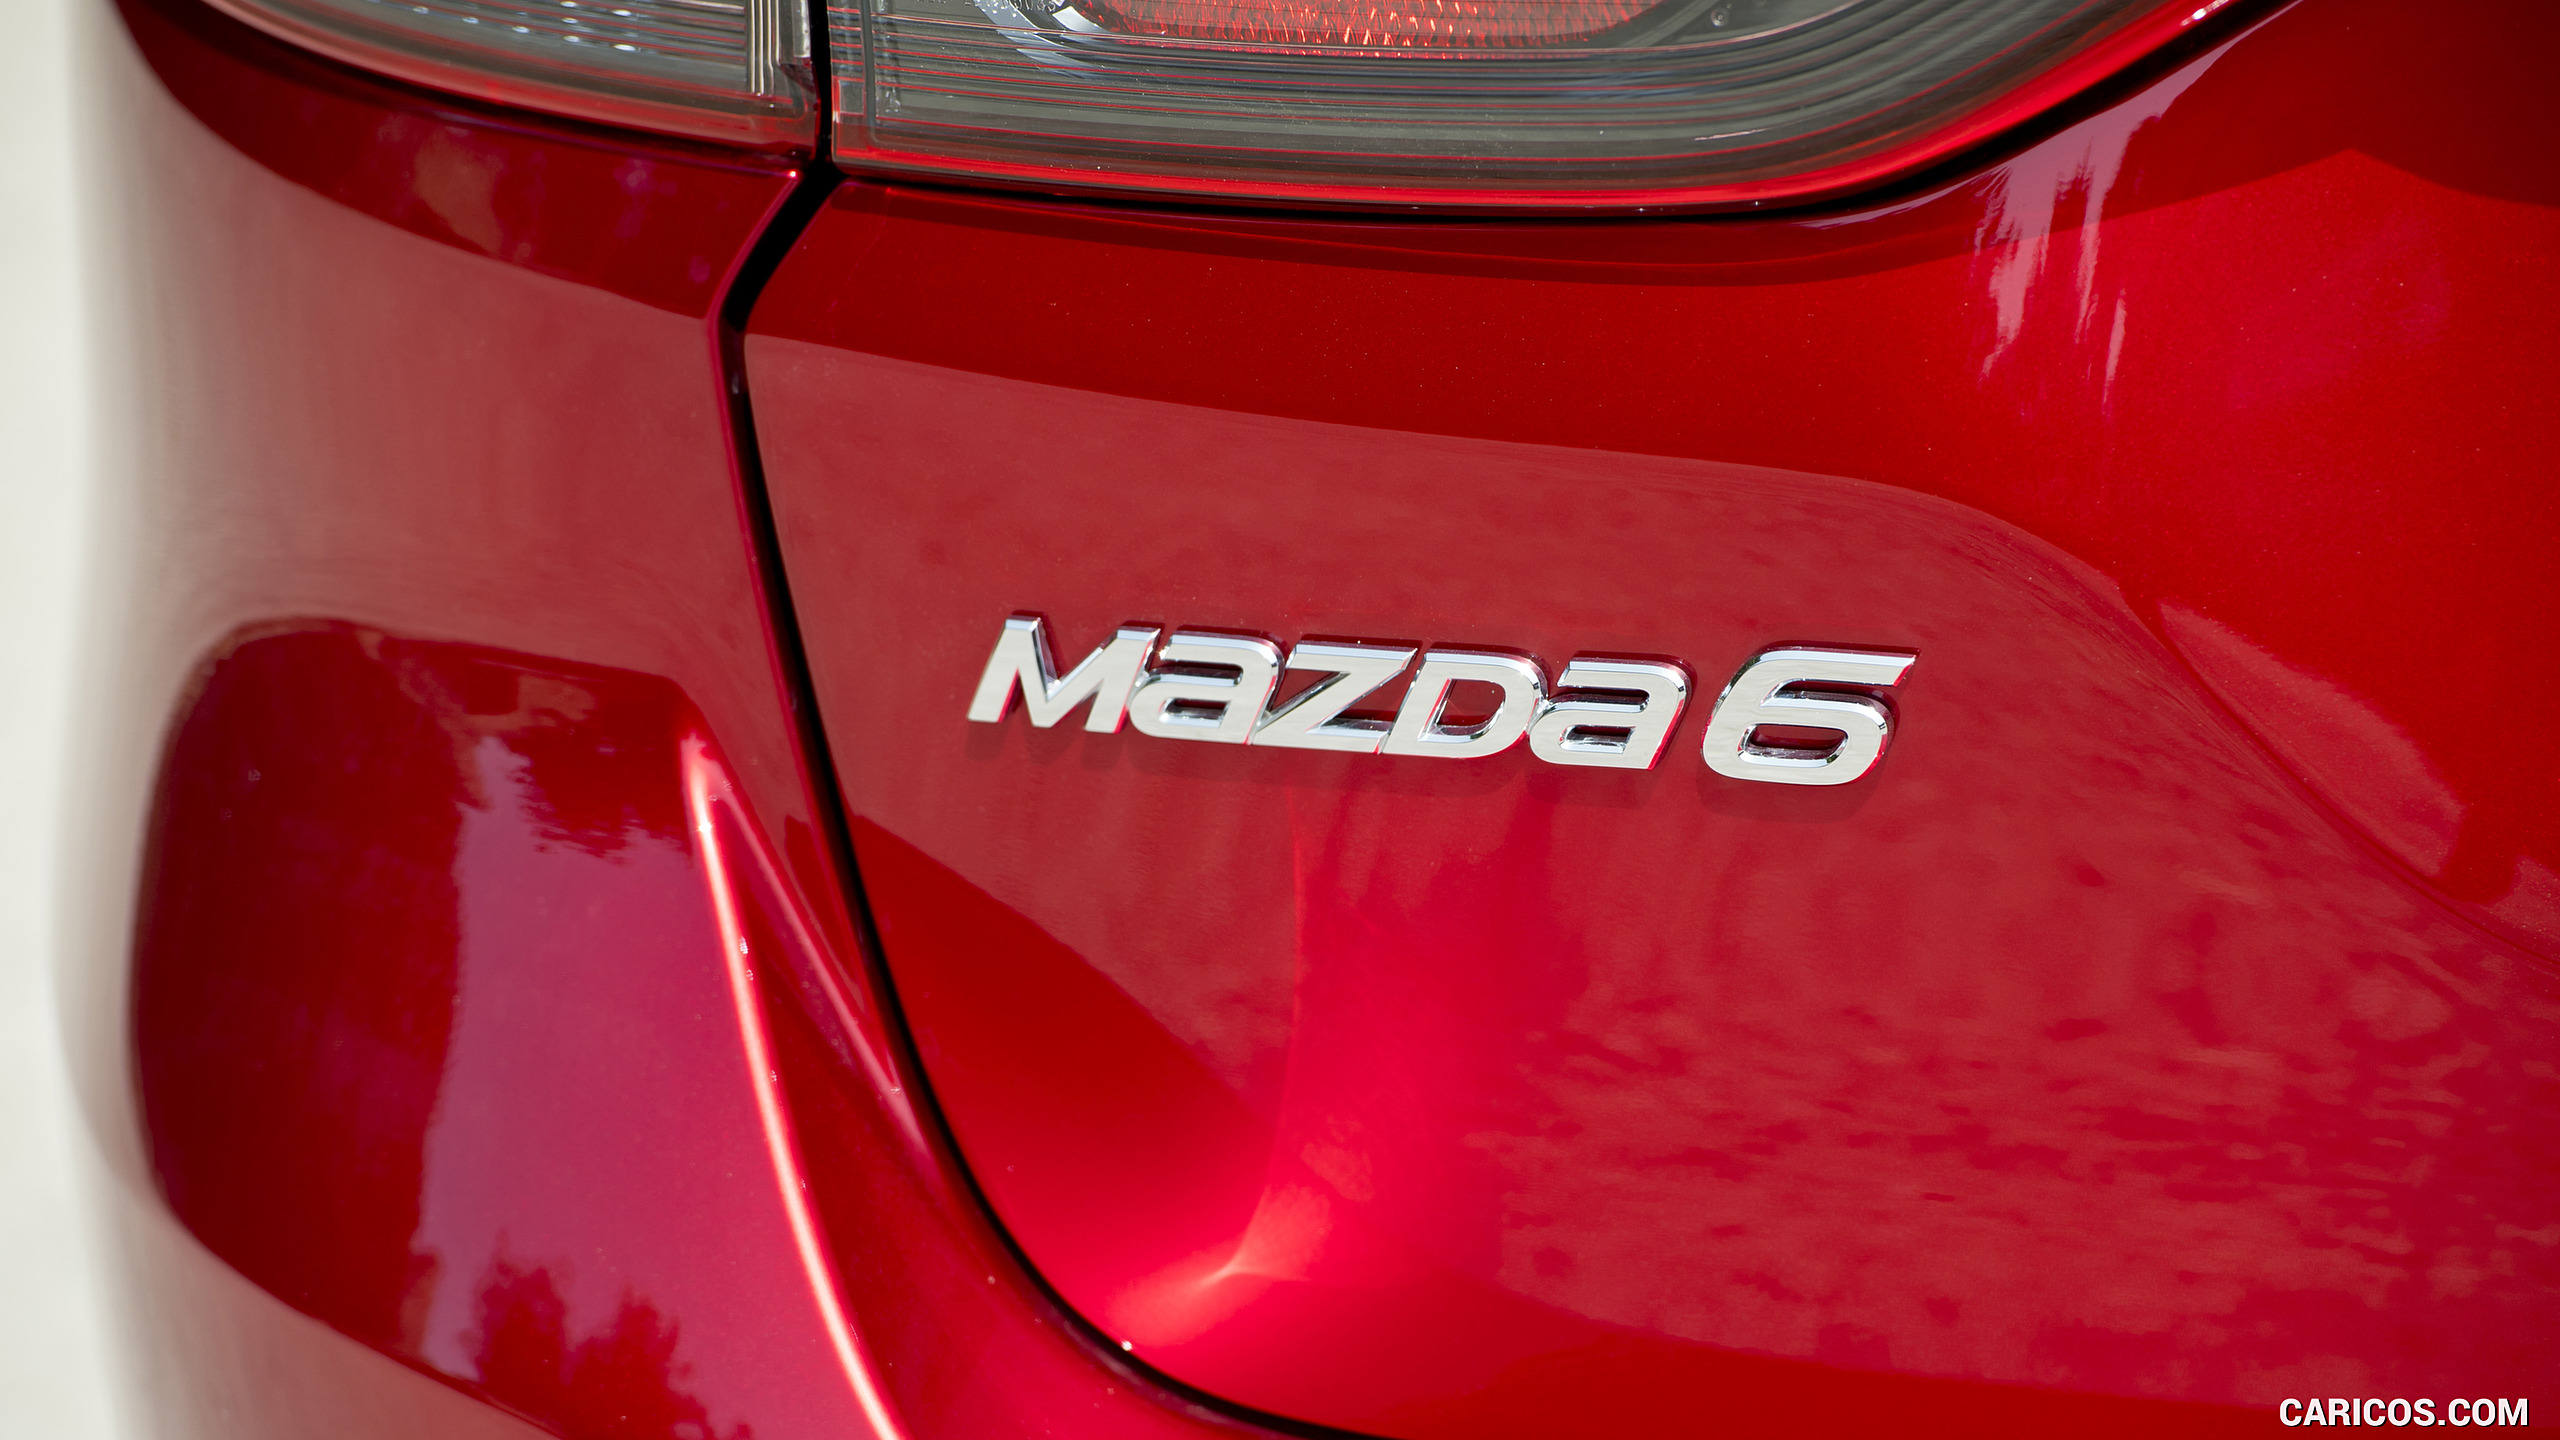 2018 Mazda6 Wagon - Badge, #229 of 235